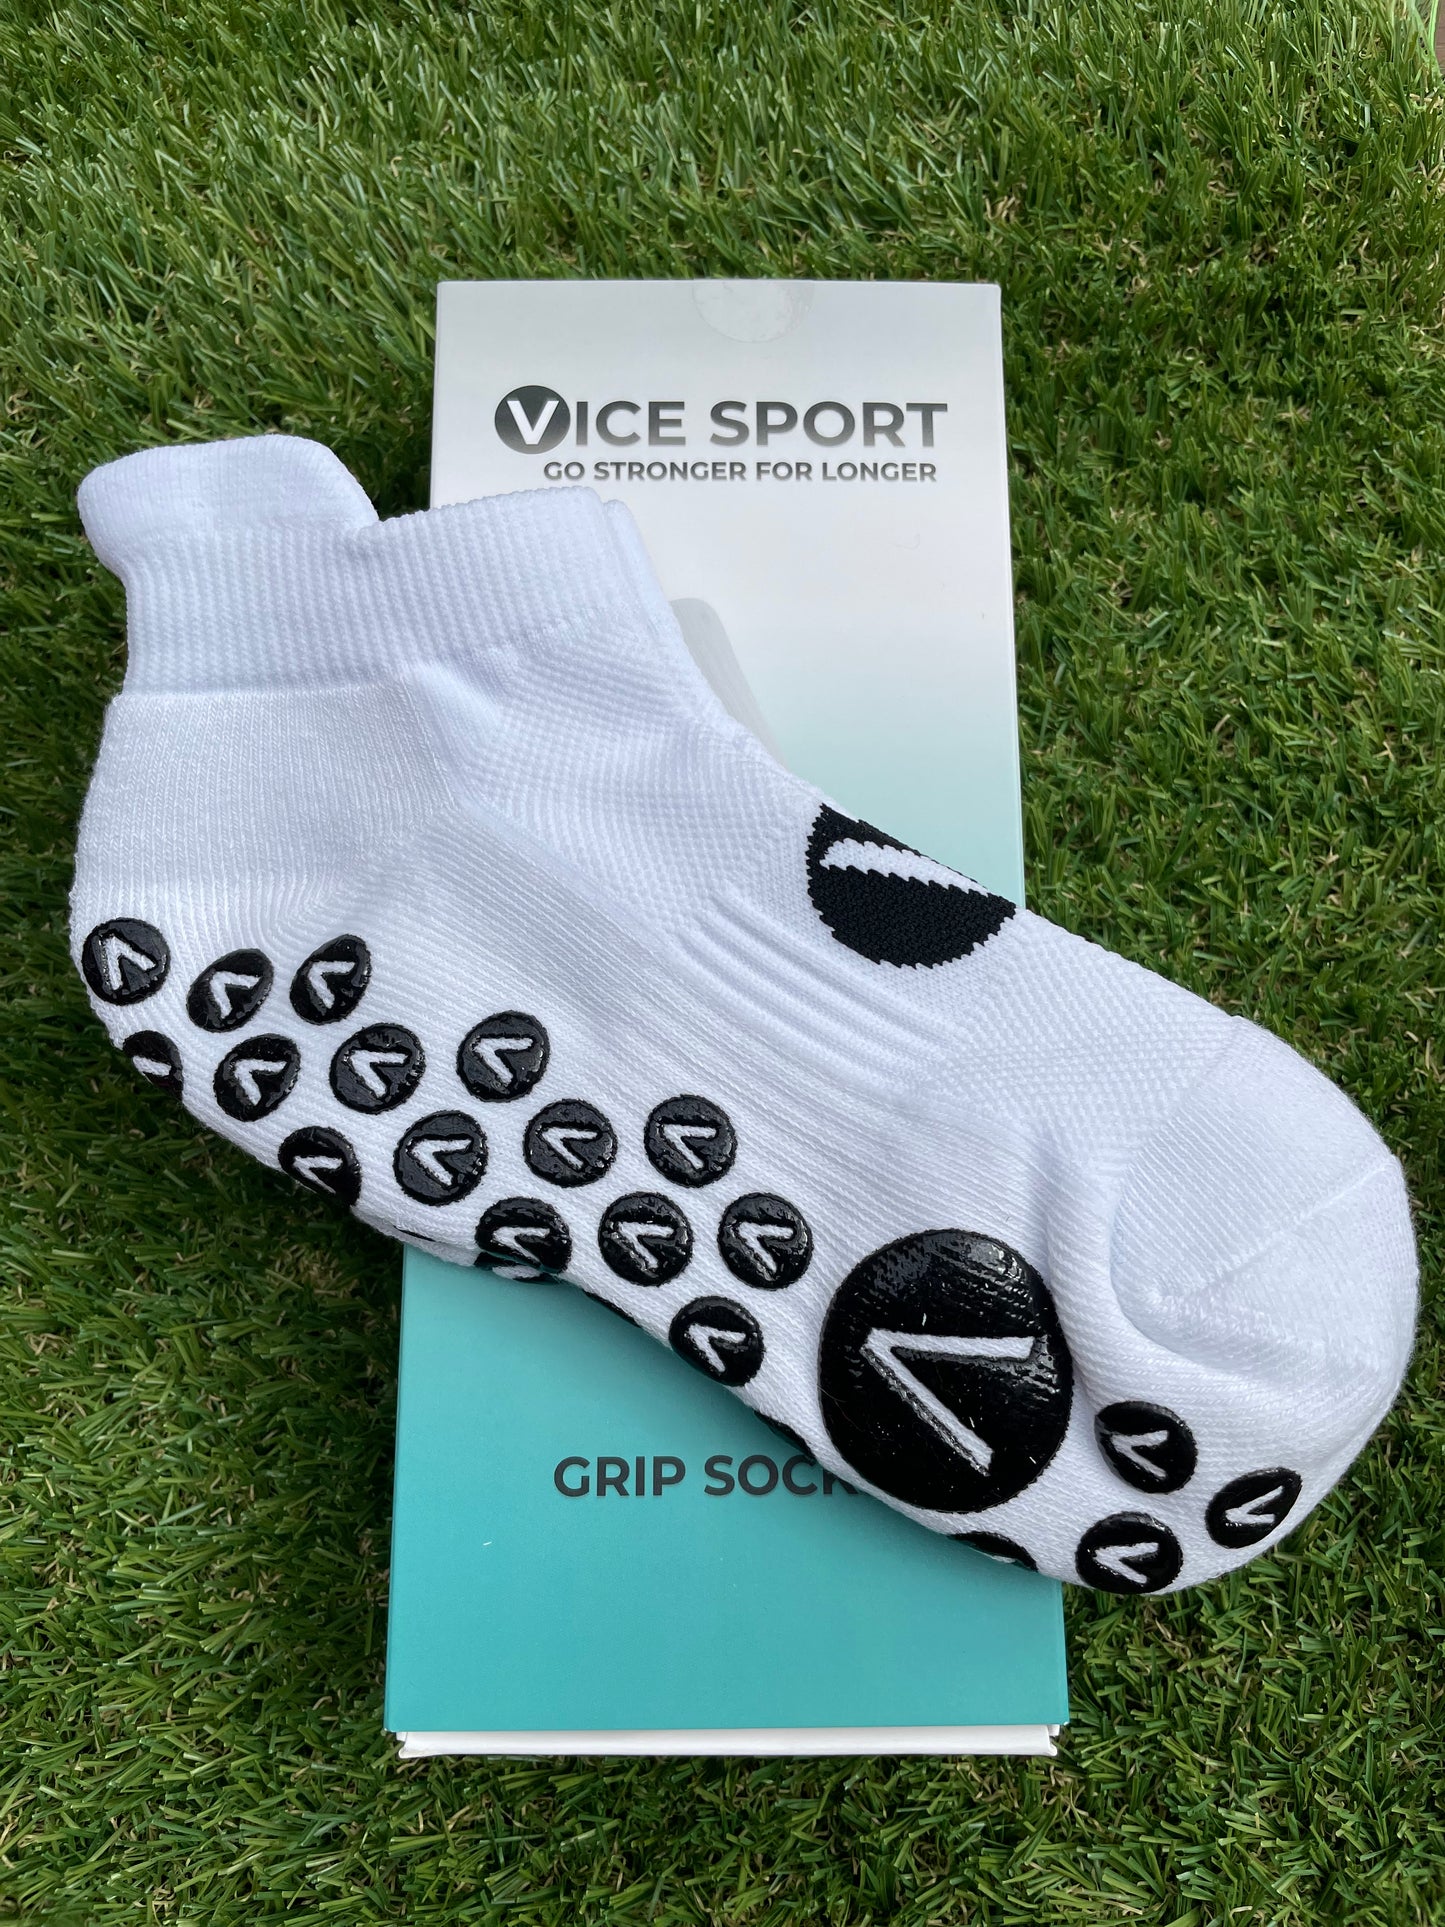 Vice Grip Socks